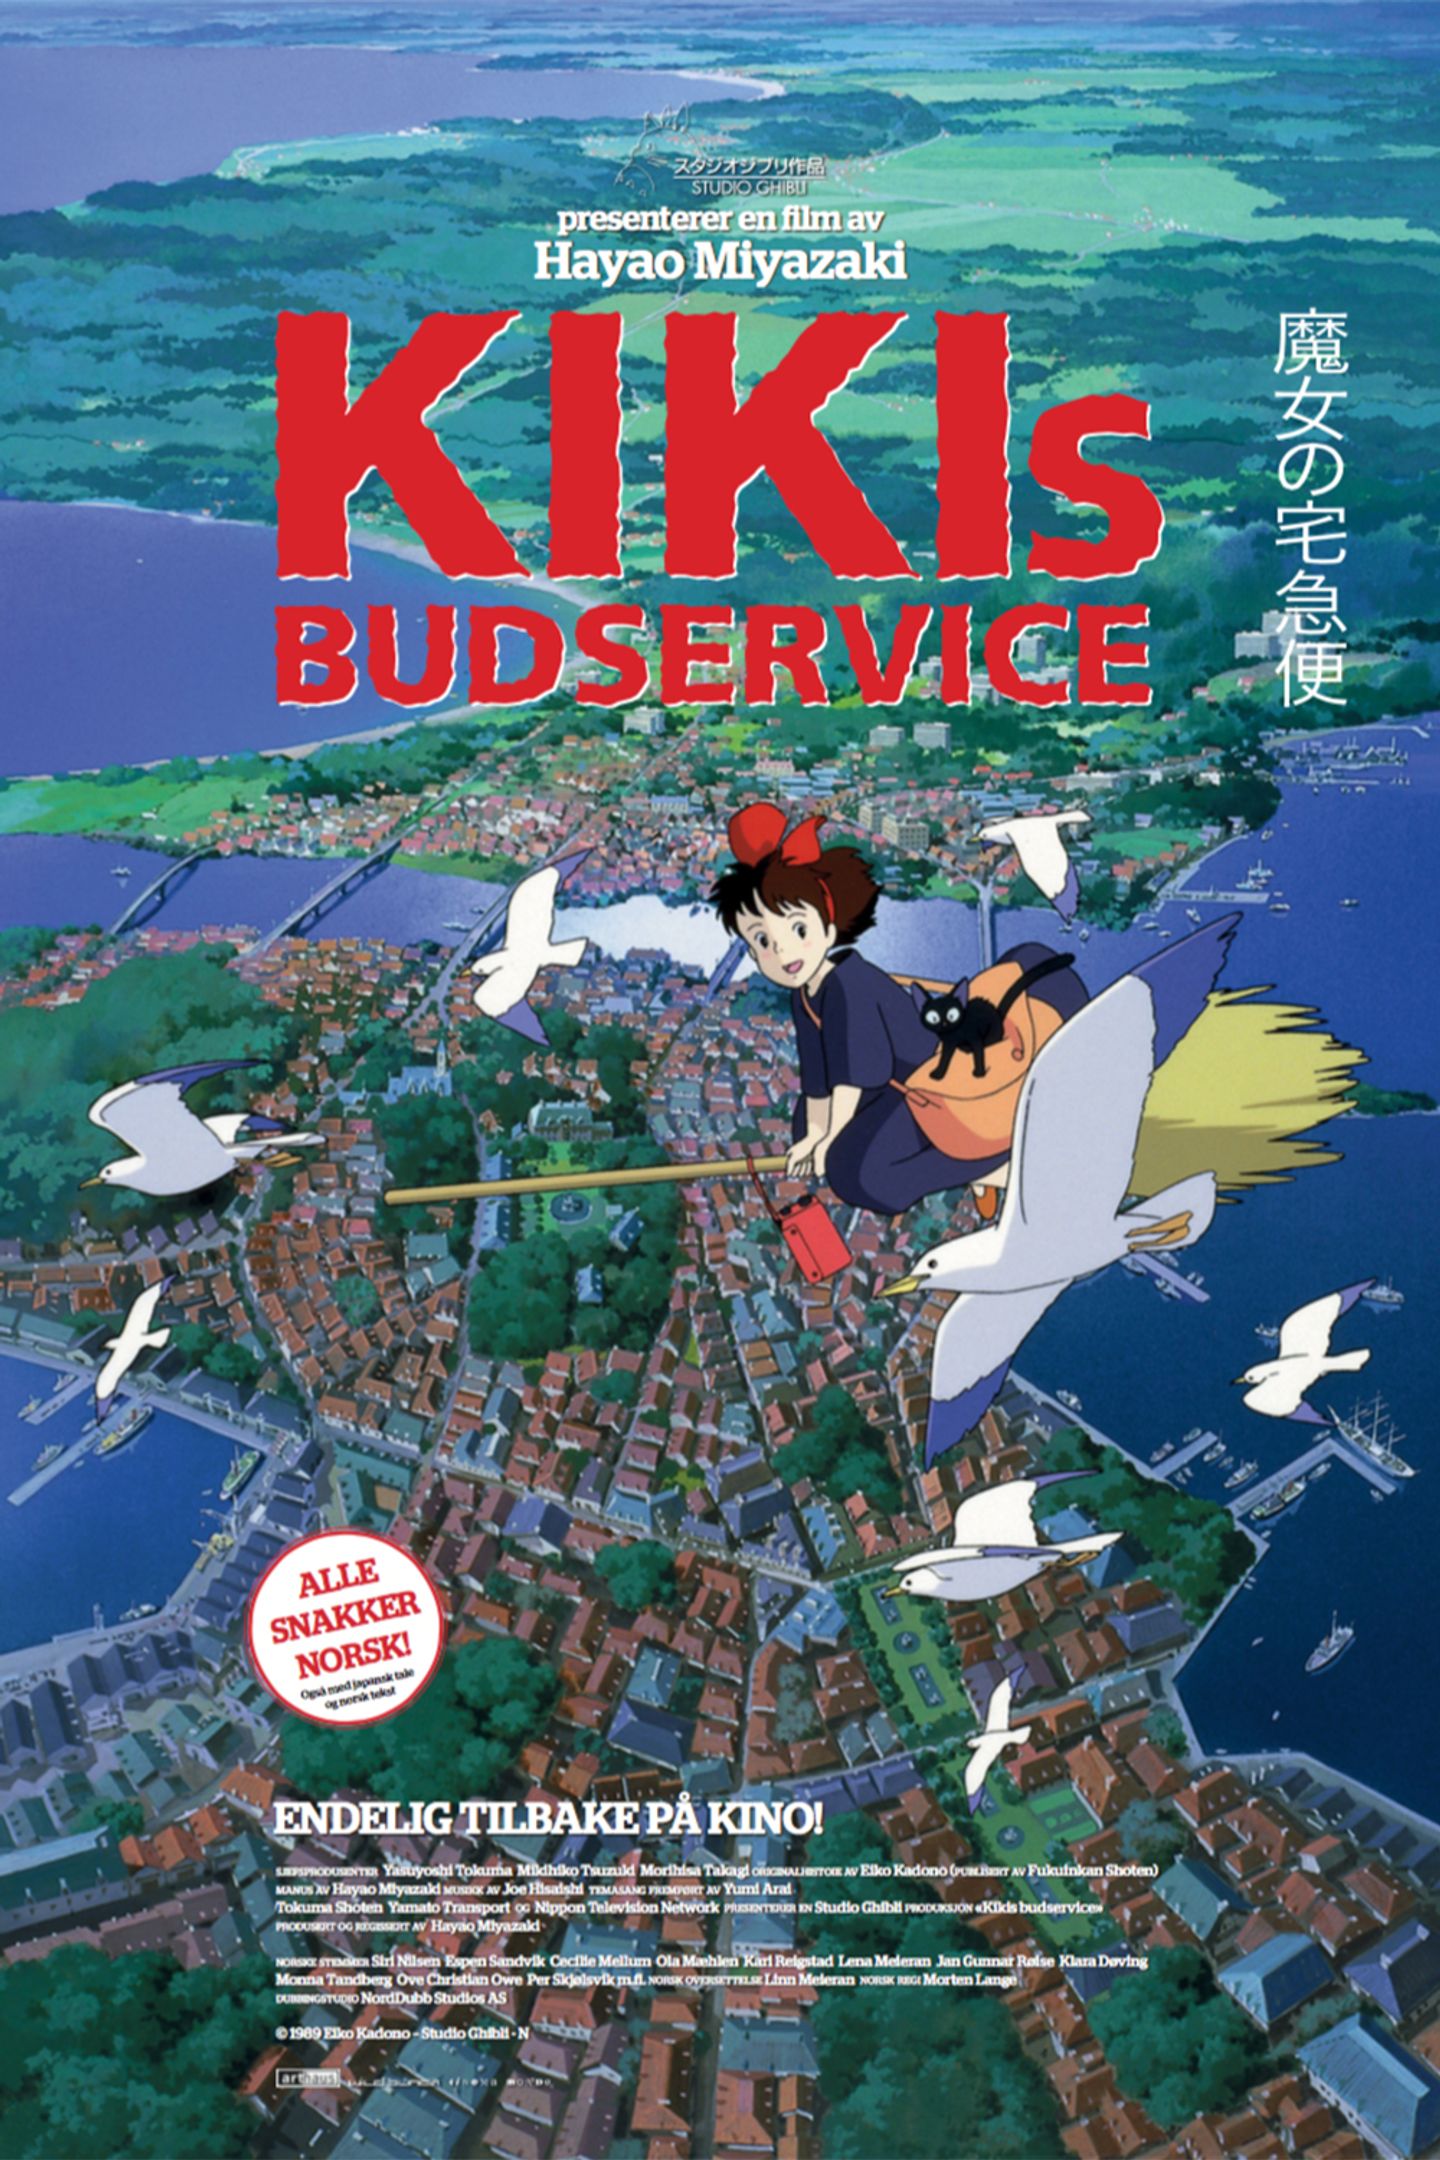 Plakat for 'Kikis budservice'